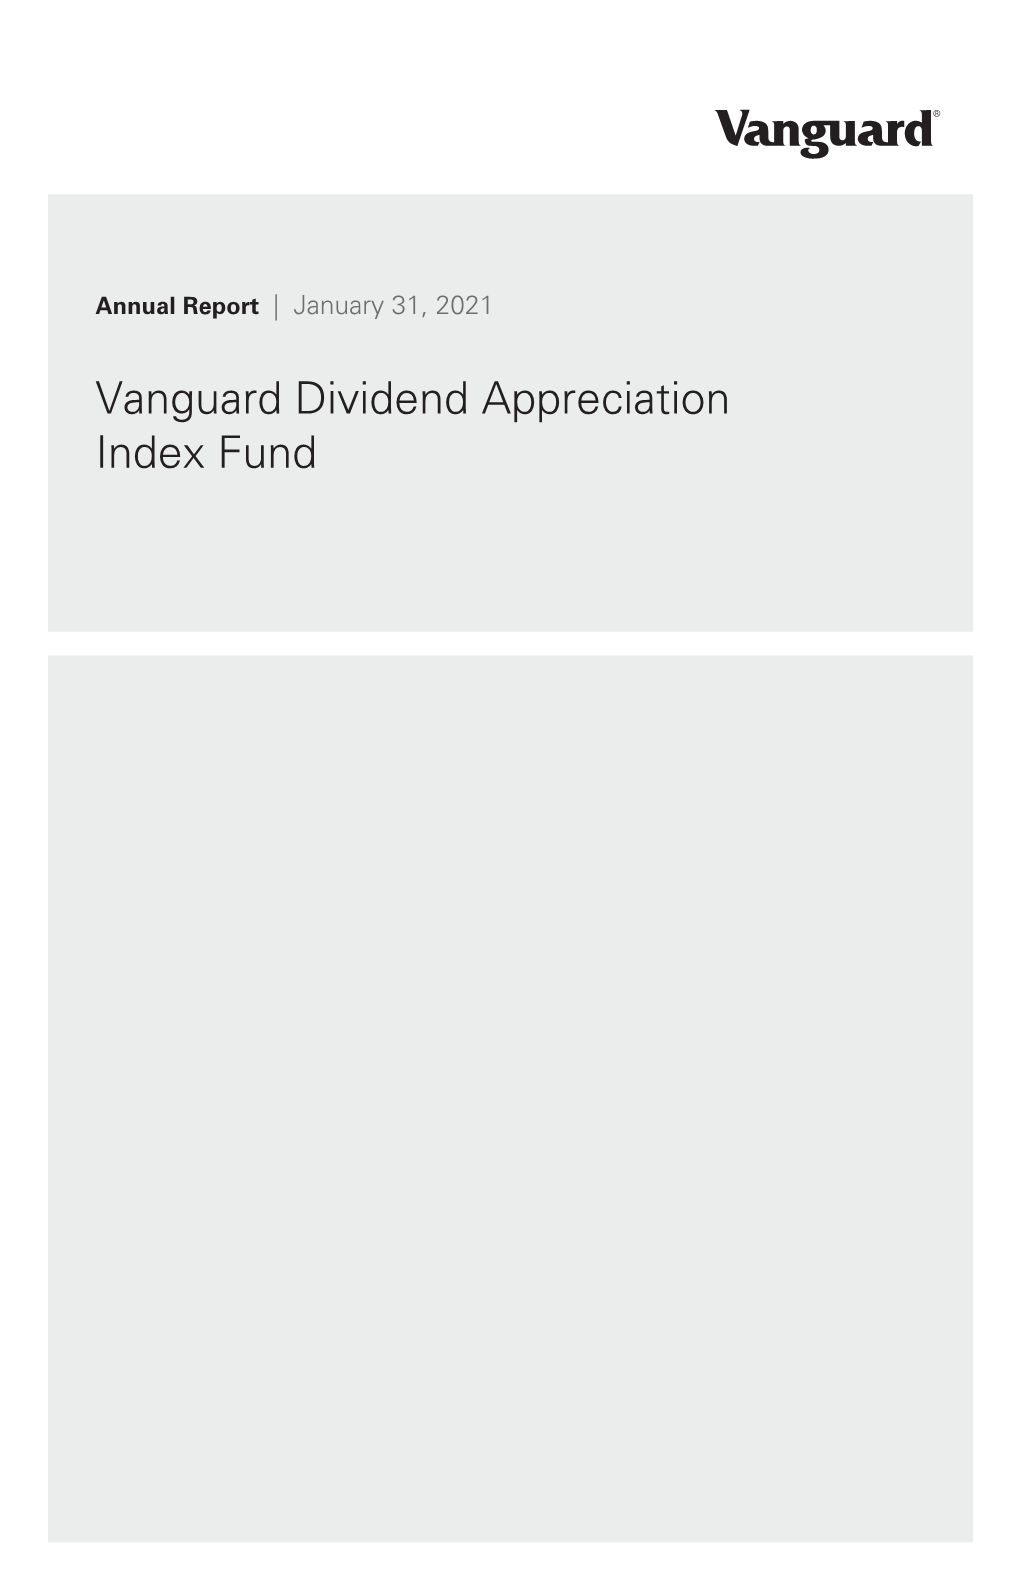 Vanguard Dividend Appreciation Index Fund Annual Report January 31, 2021